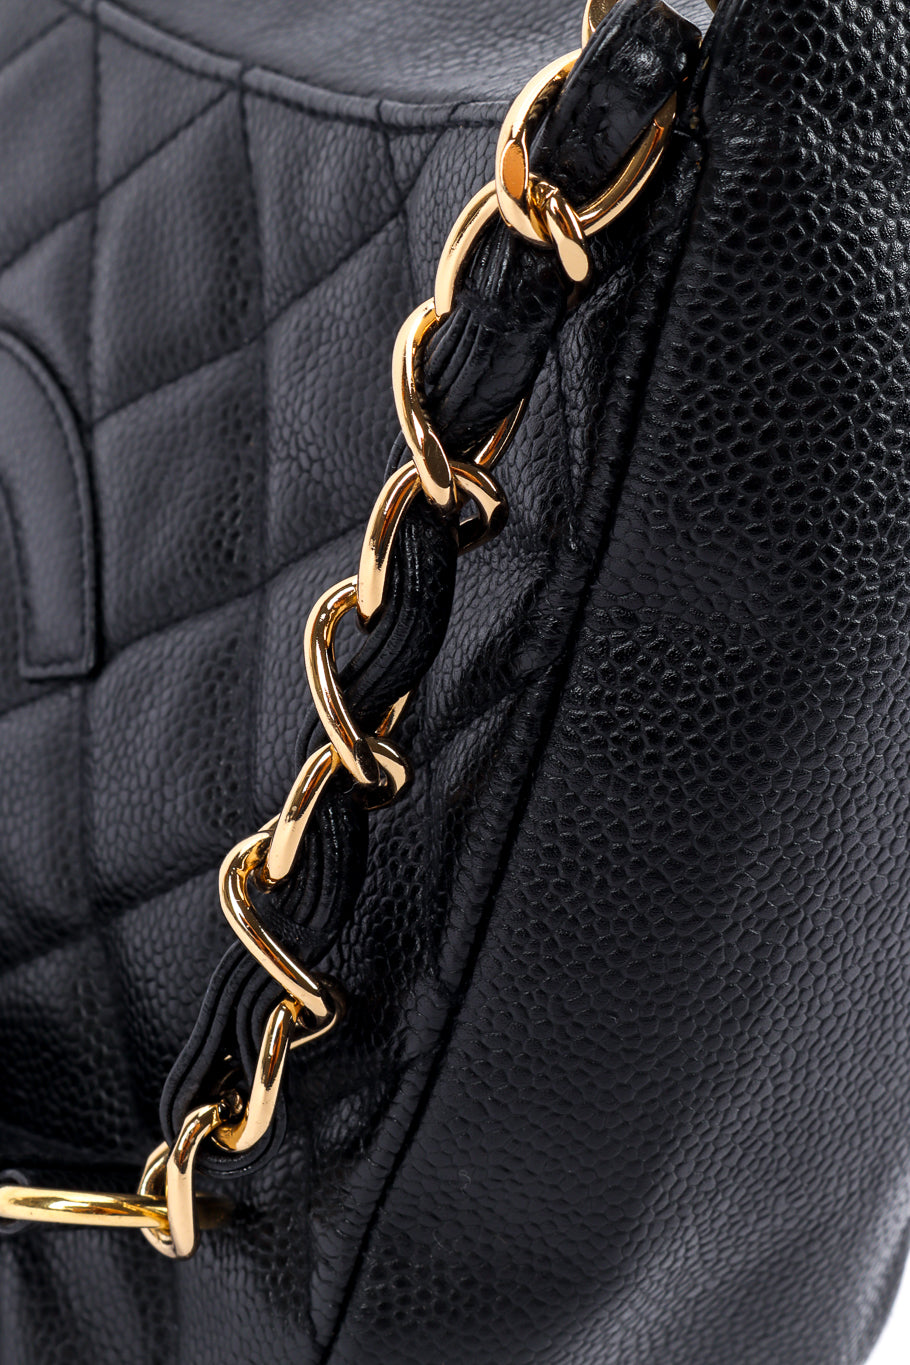 Chanel Quilted CC Shoulder Bag chain strap closeup @recess la